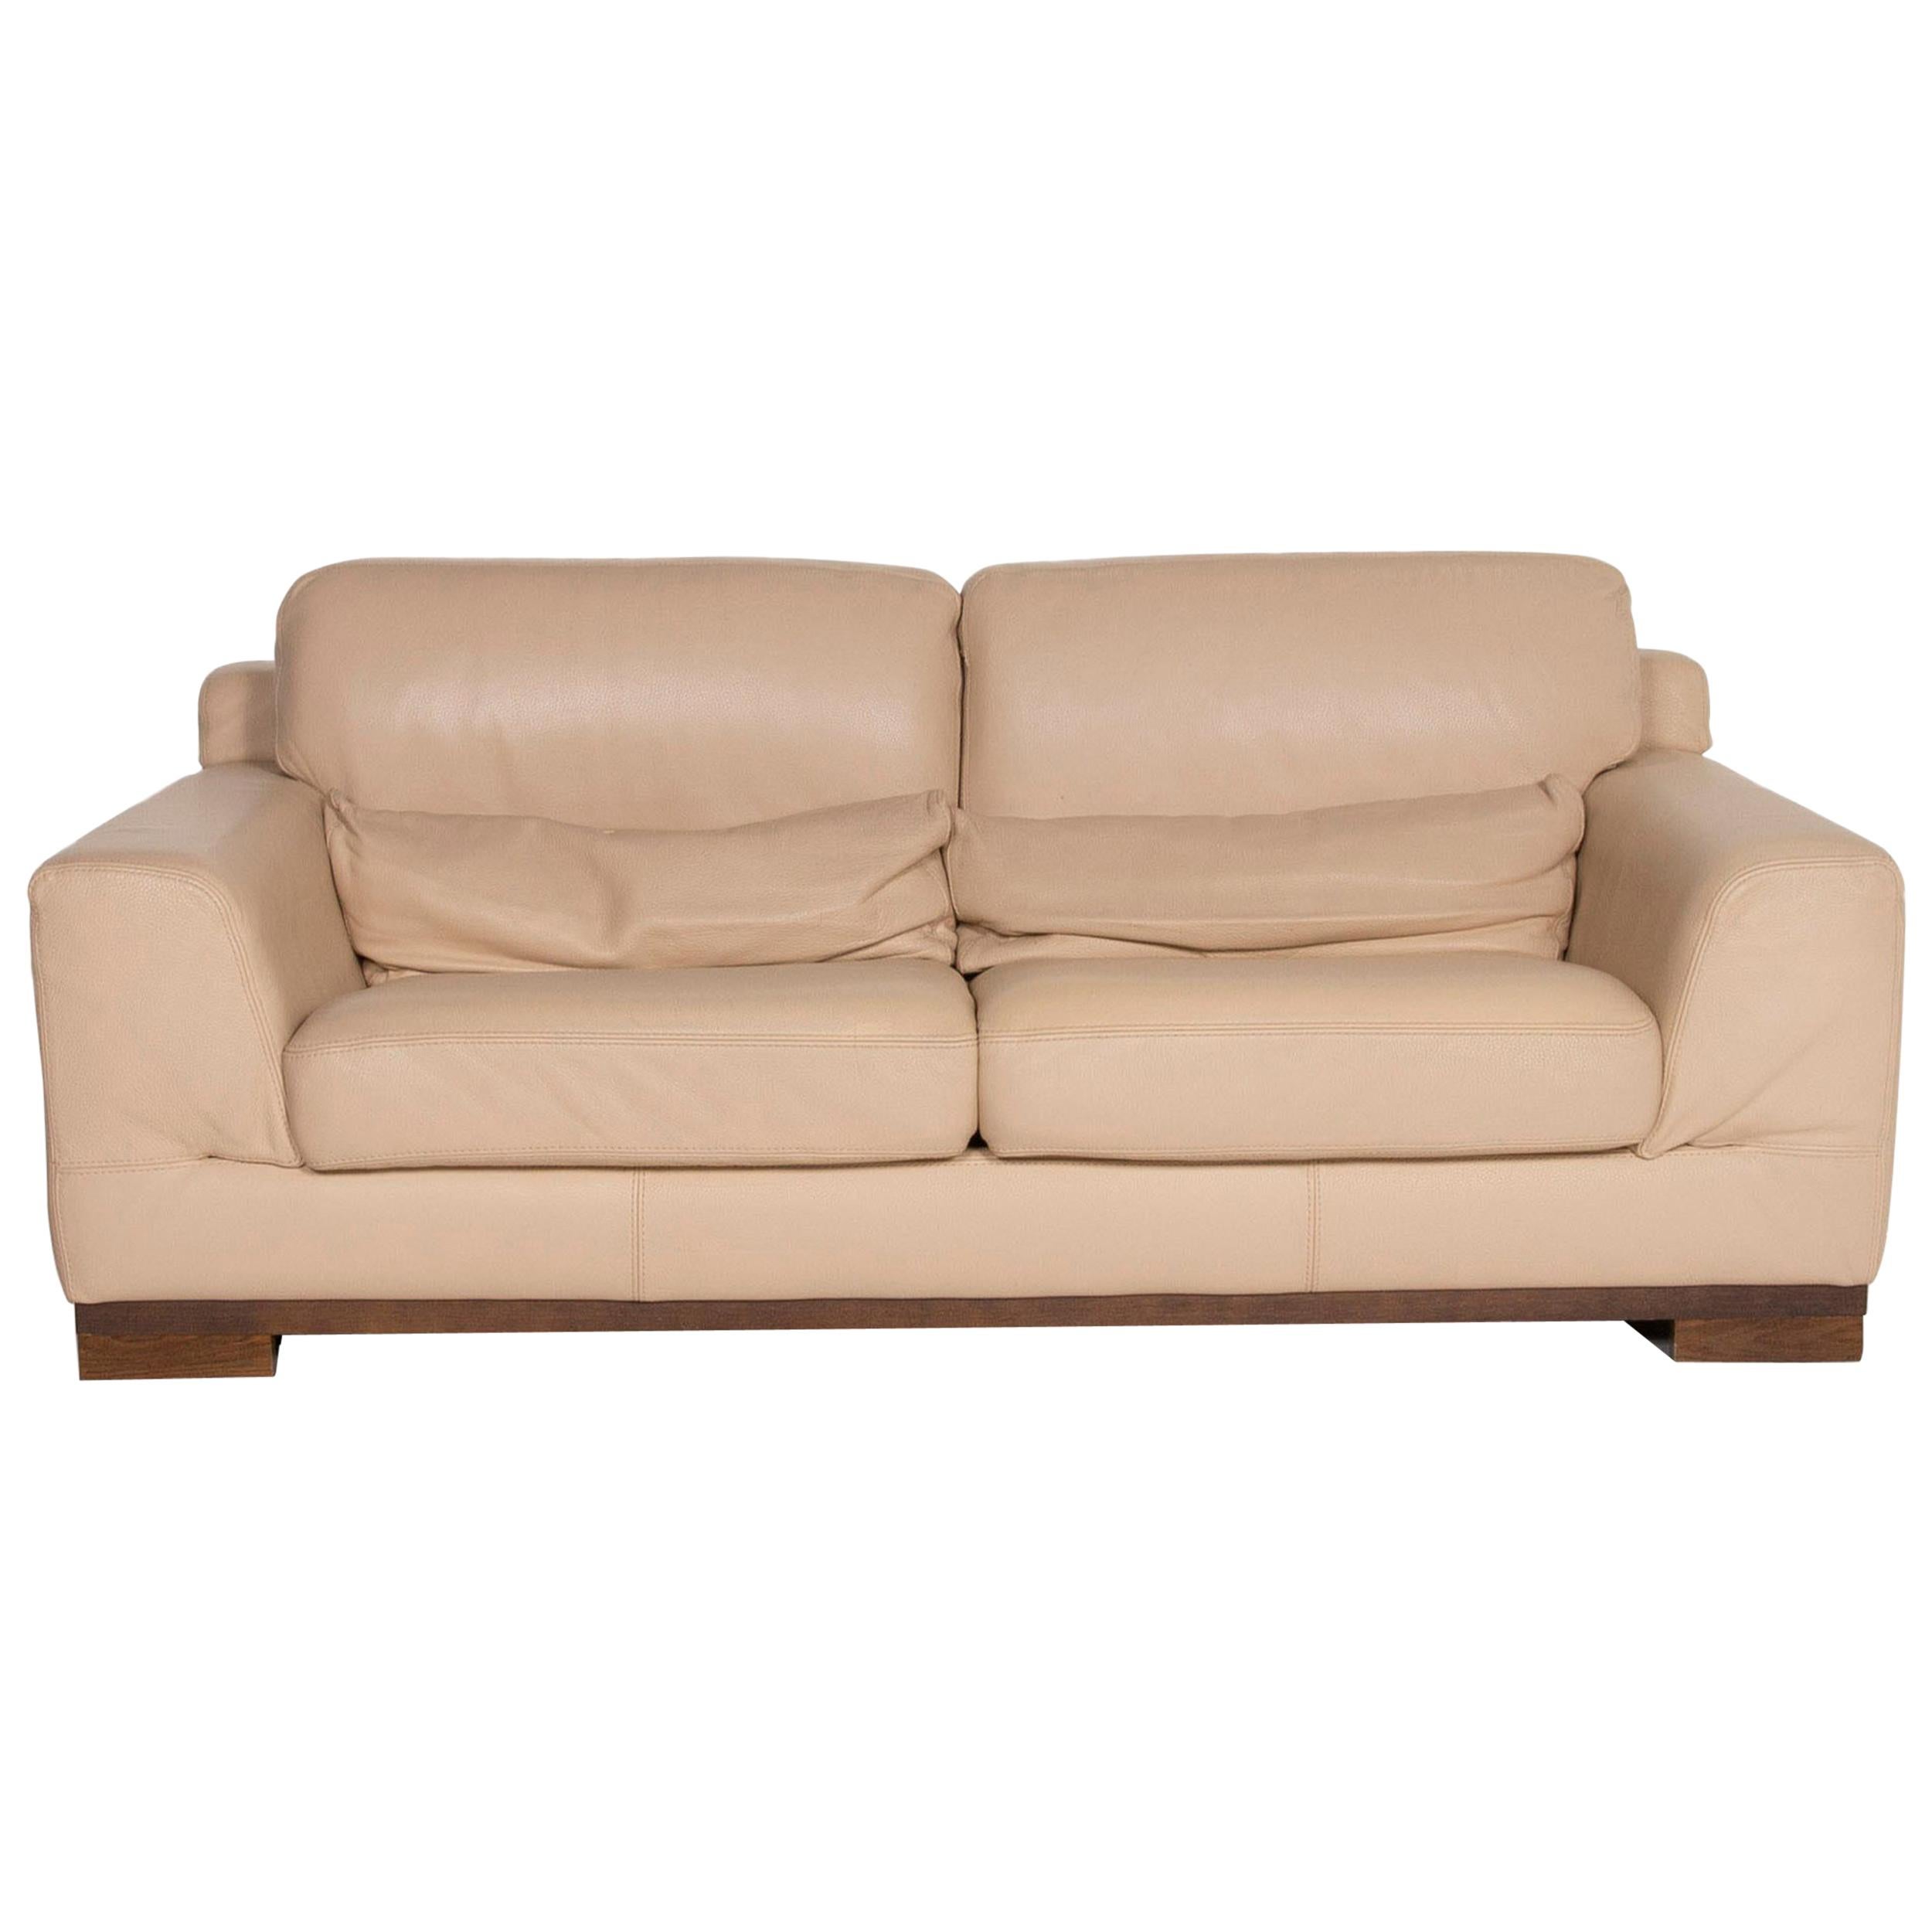 Natuzzi 2085 Leather Sofa Beige Two, Leather Couch Natuzzi